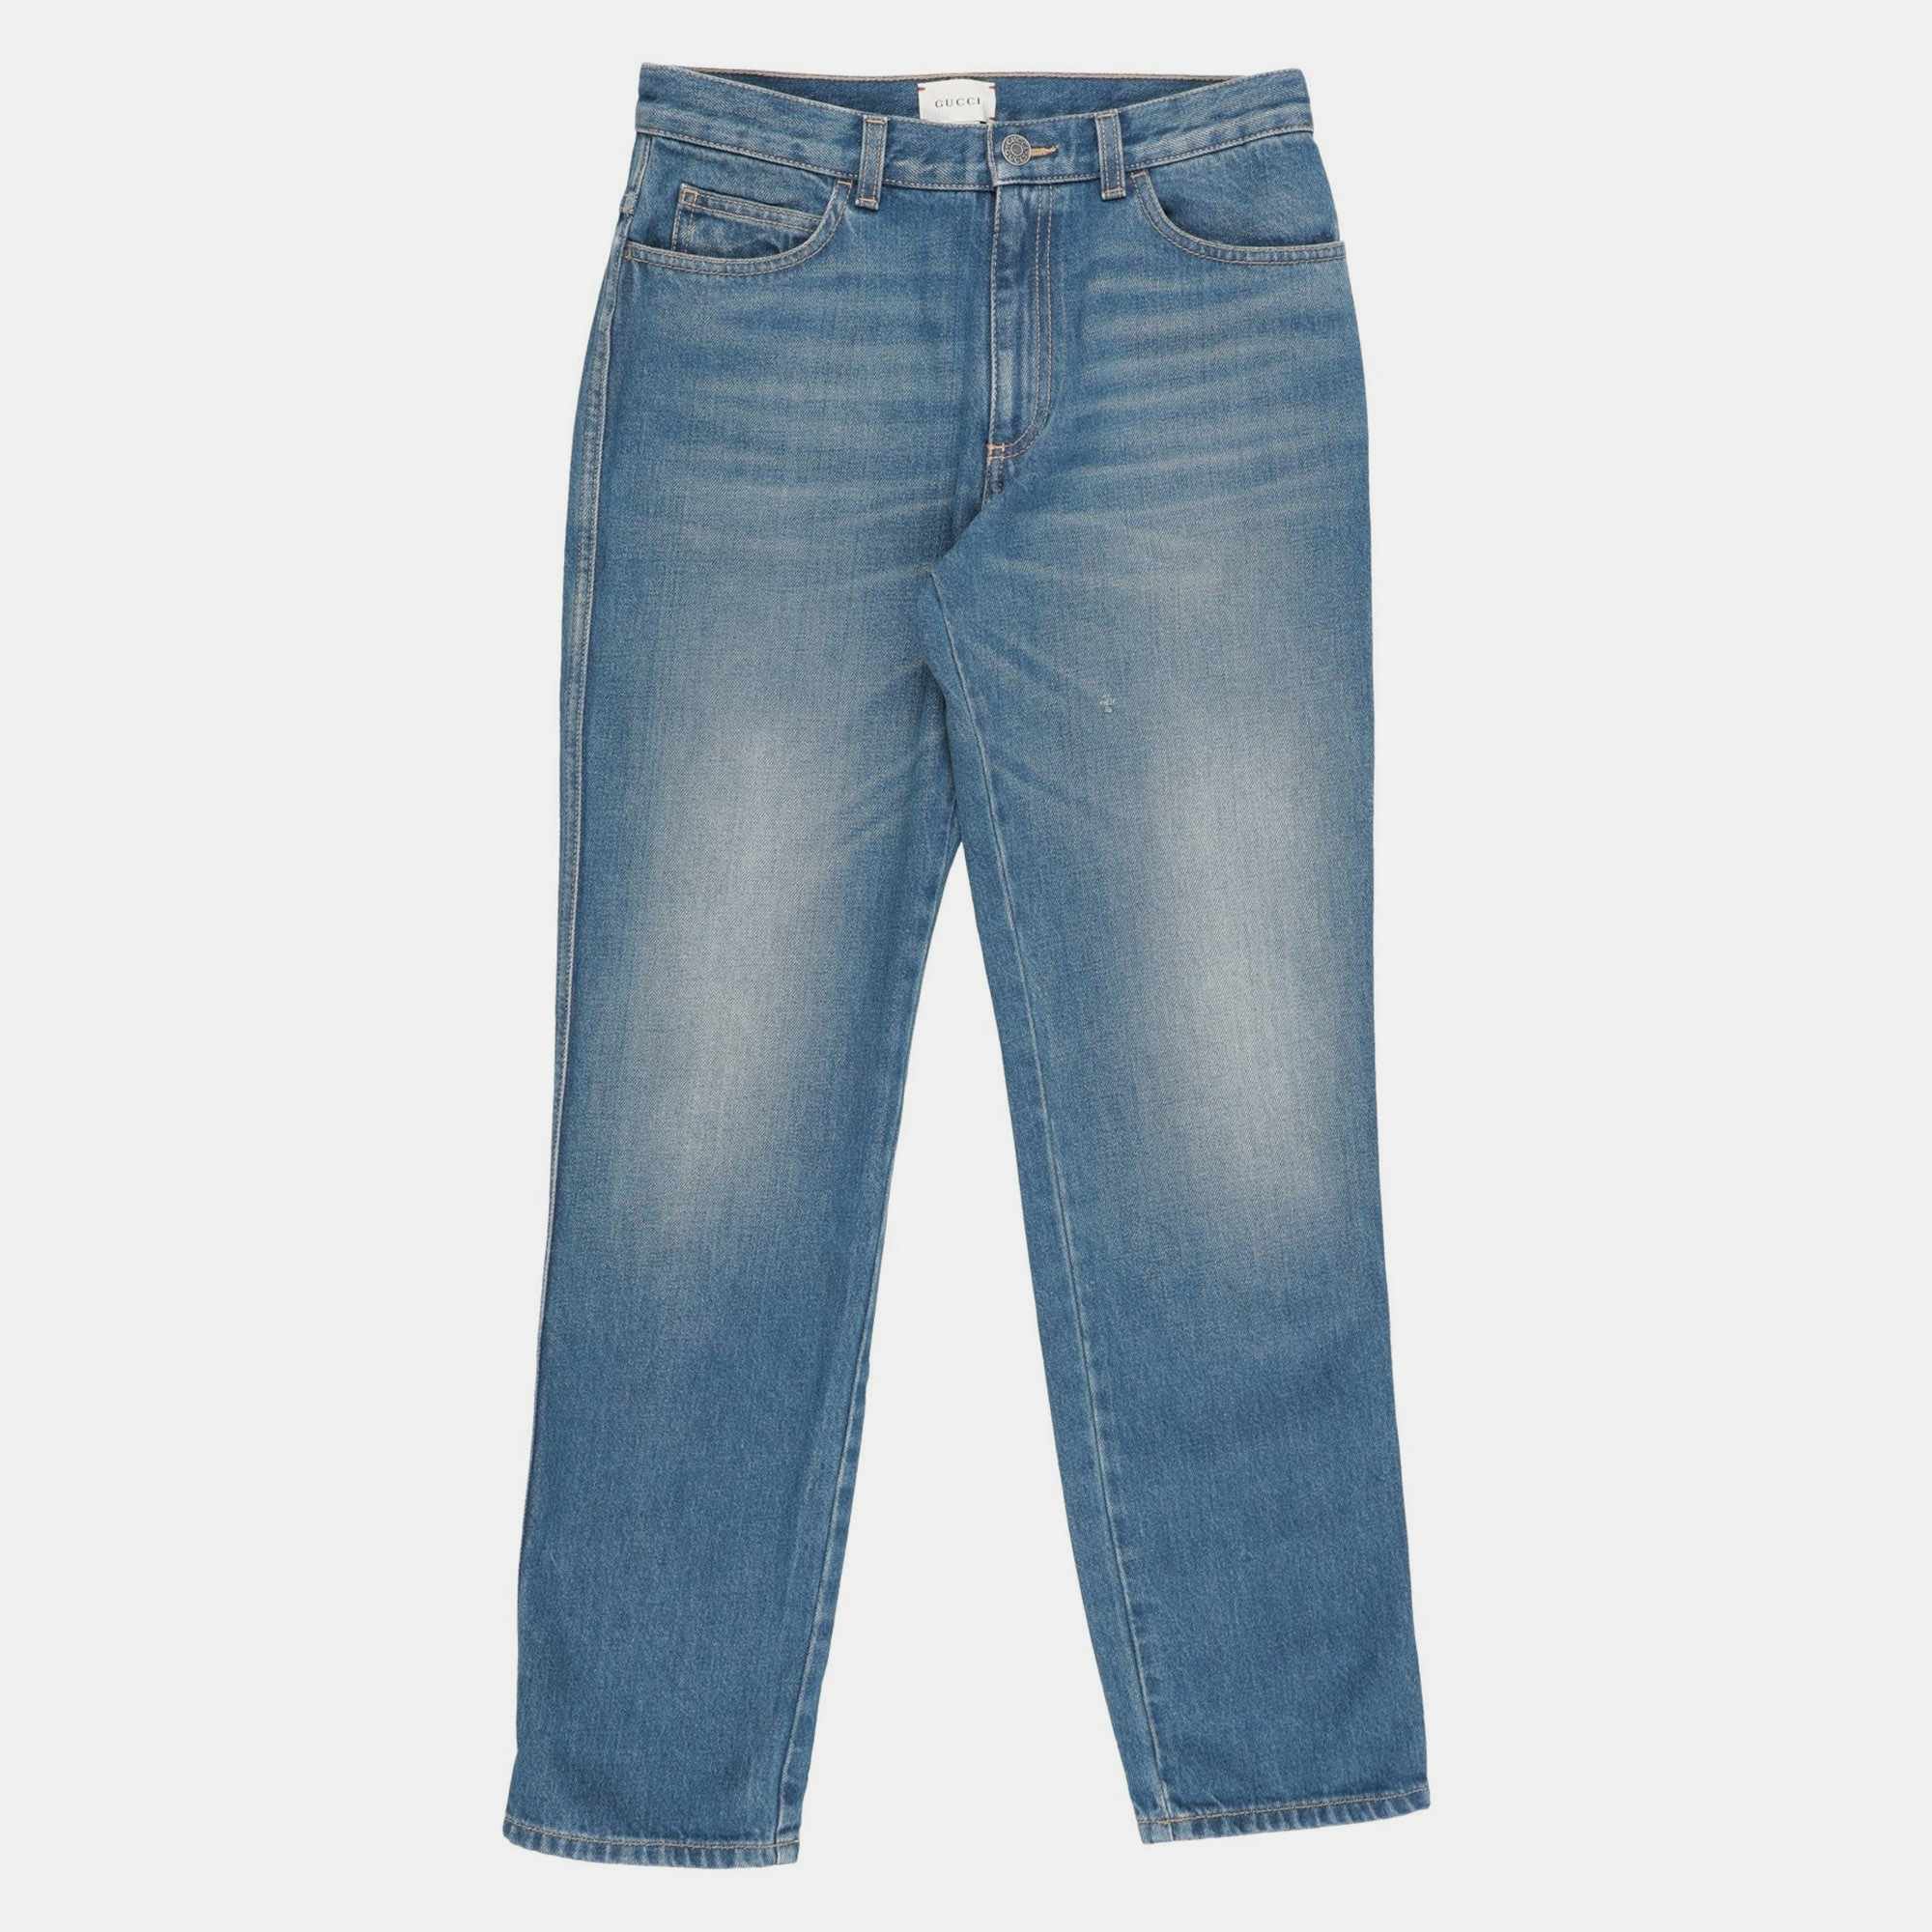 Gucci blue denim jeans size 12y